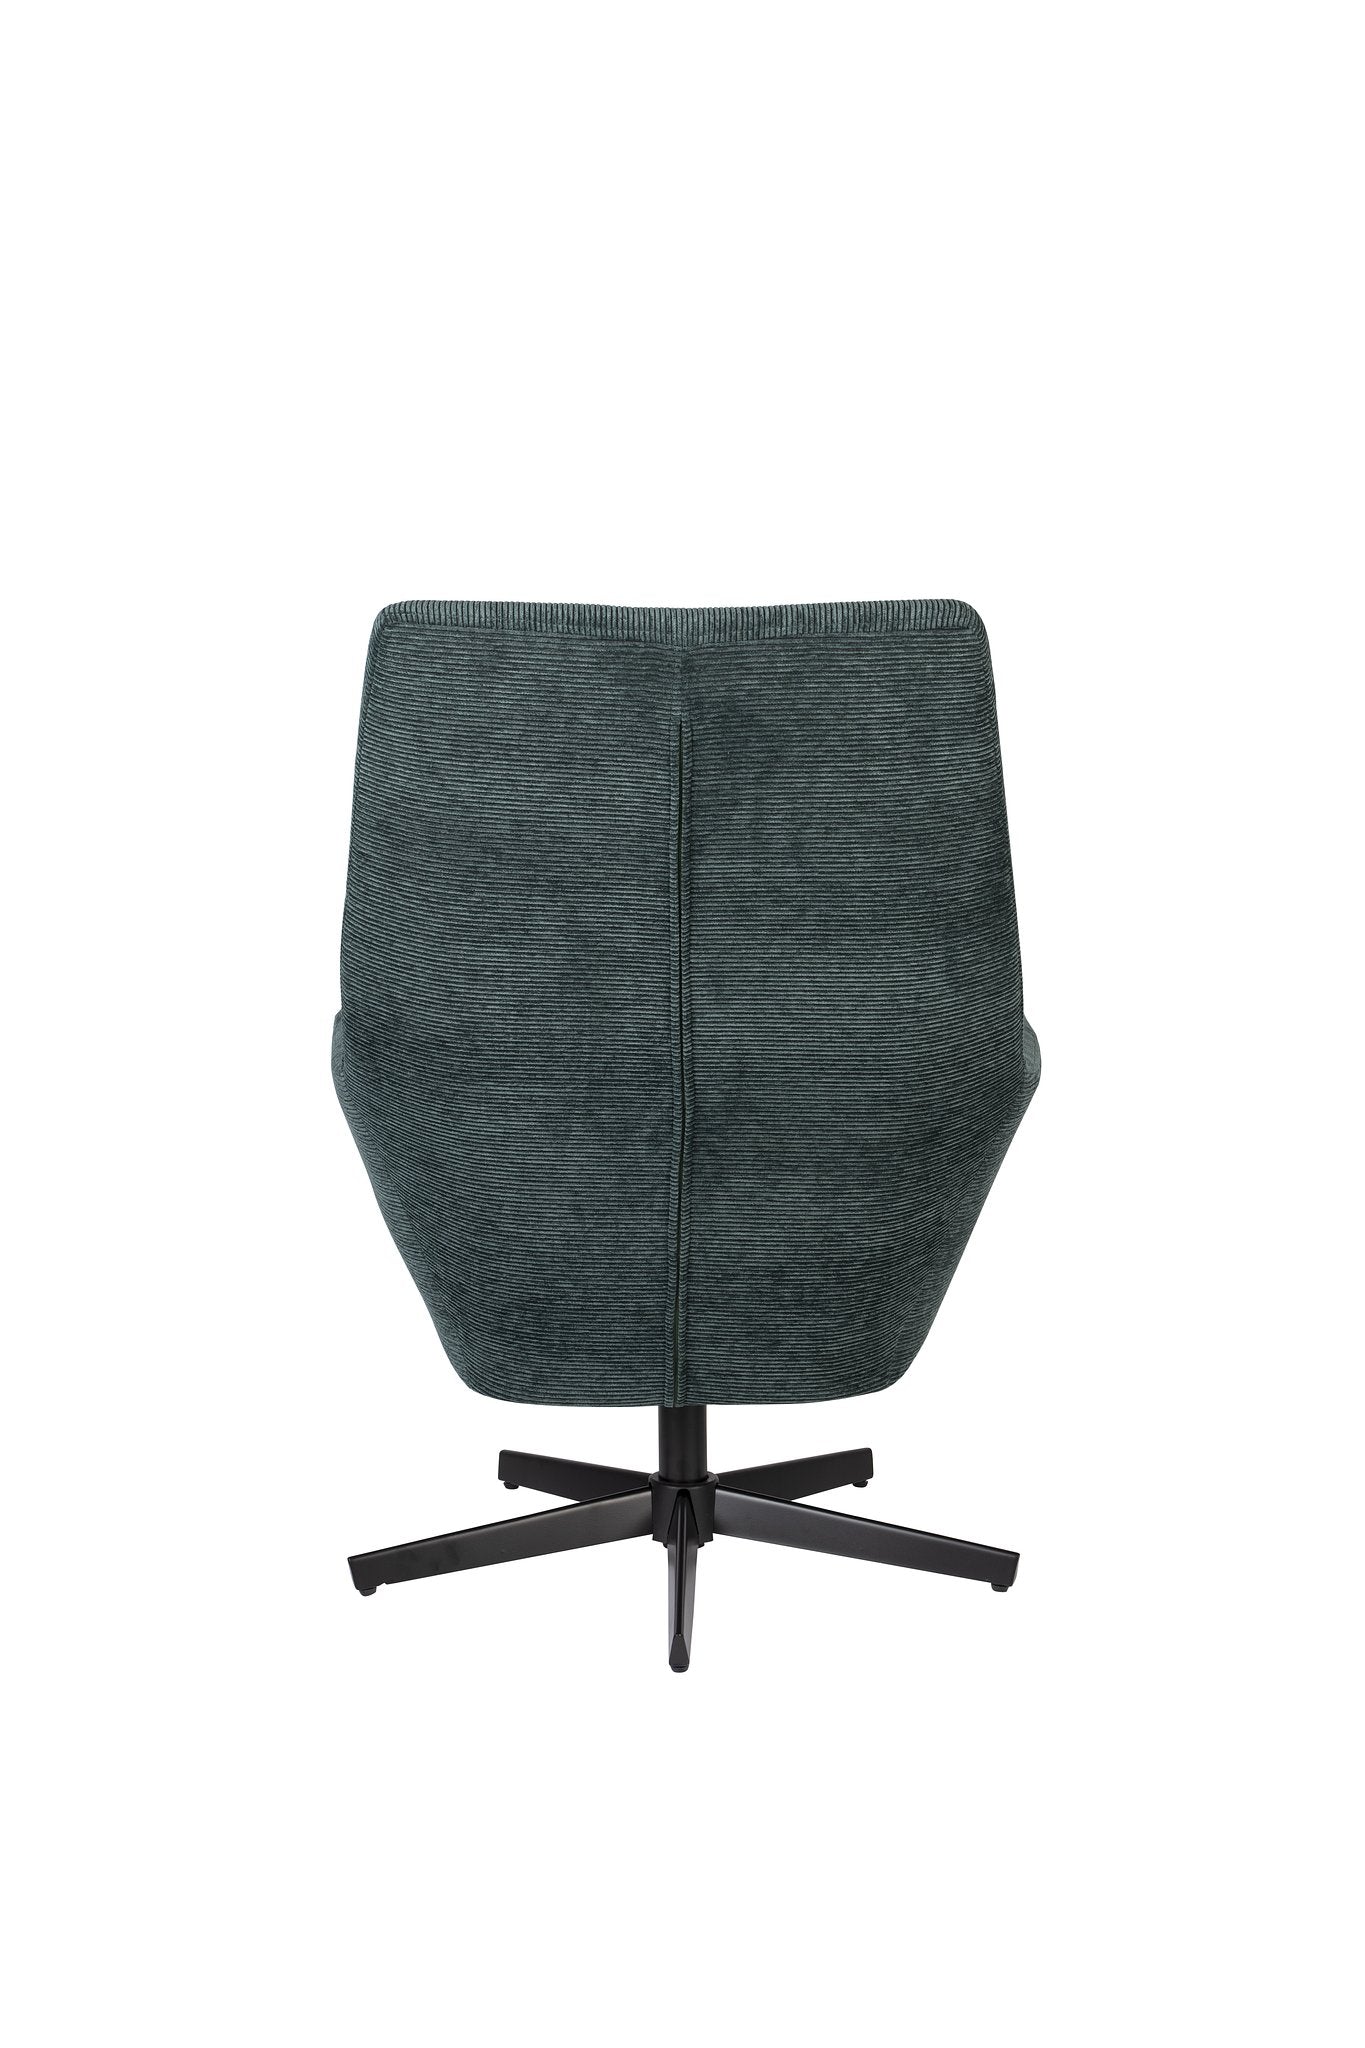 ANLI STYLE Lounge Chair Bruno Rib Green